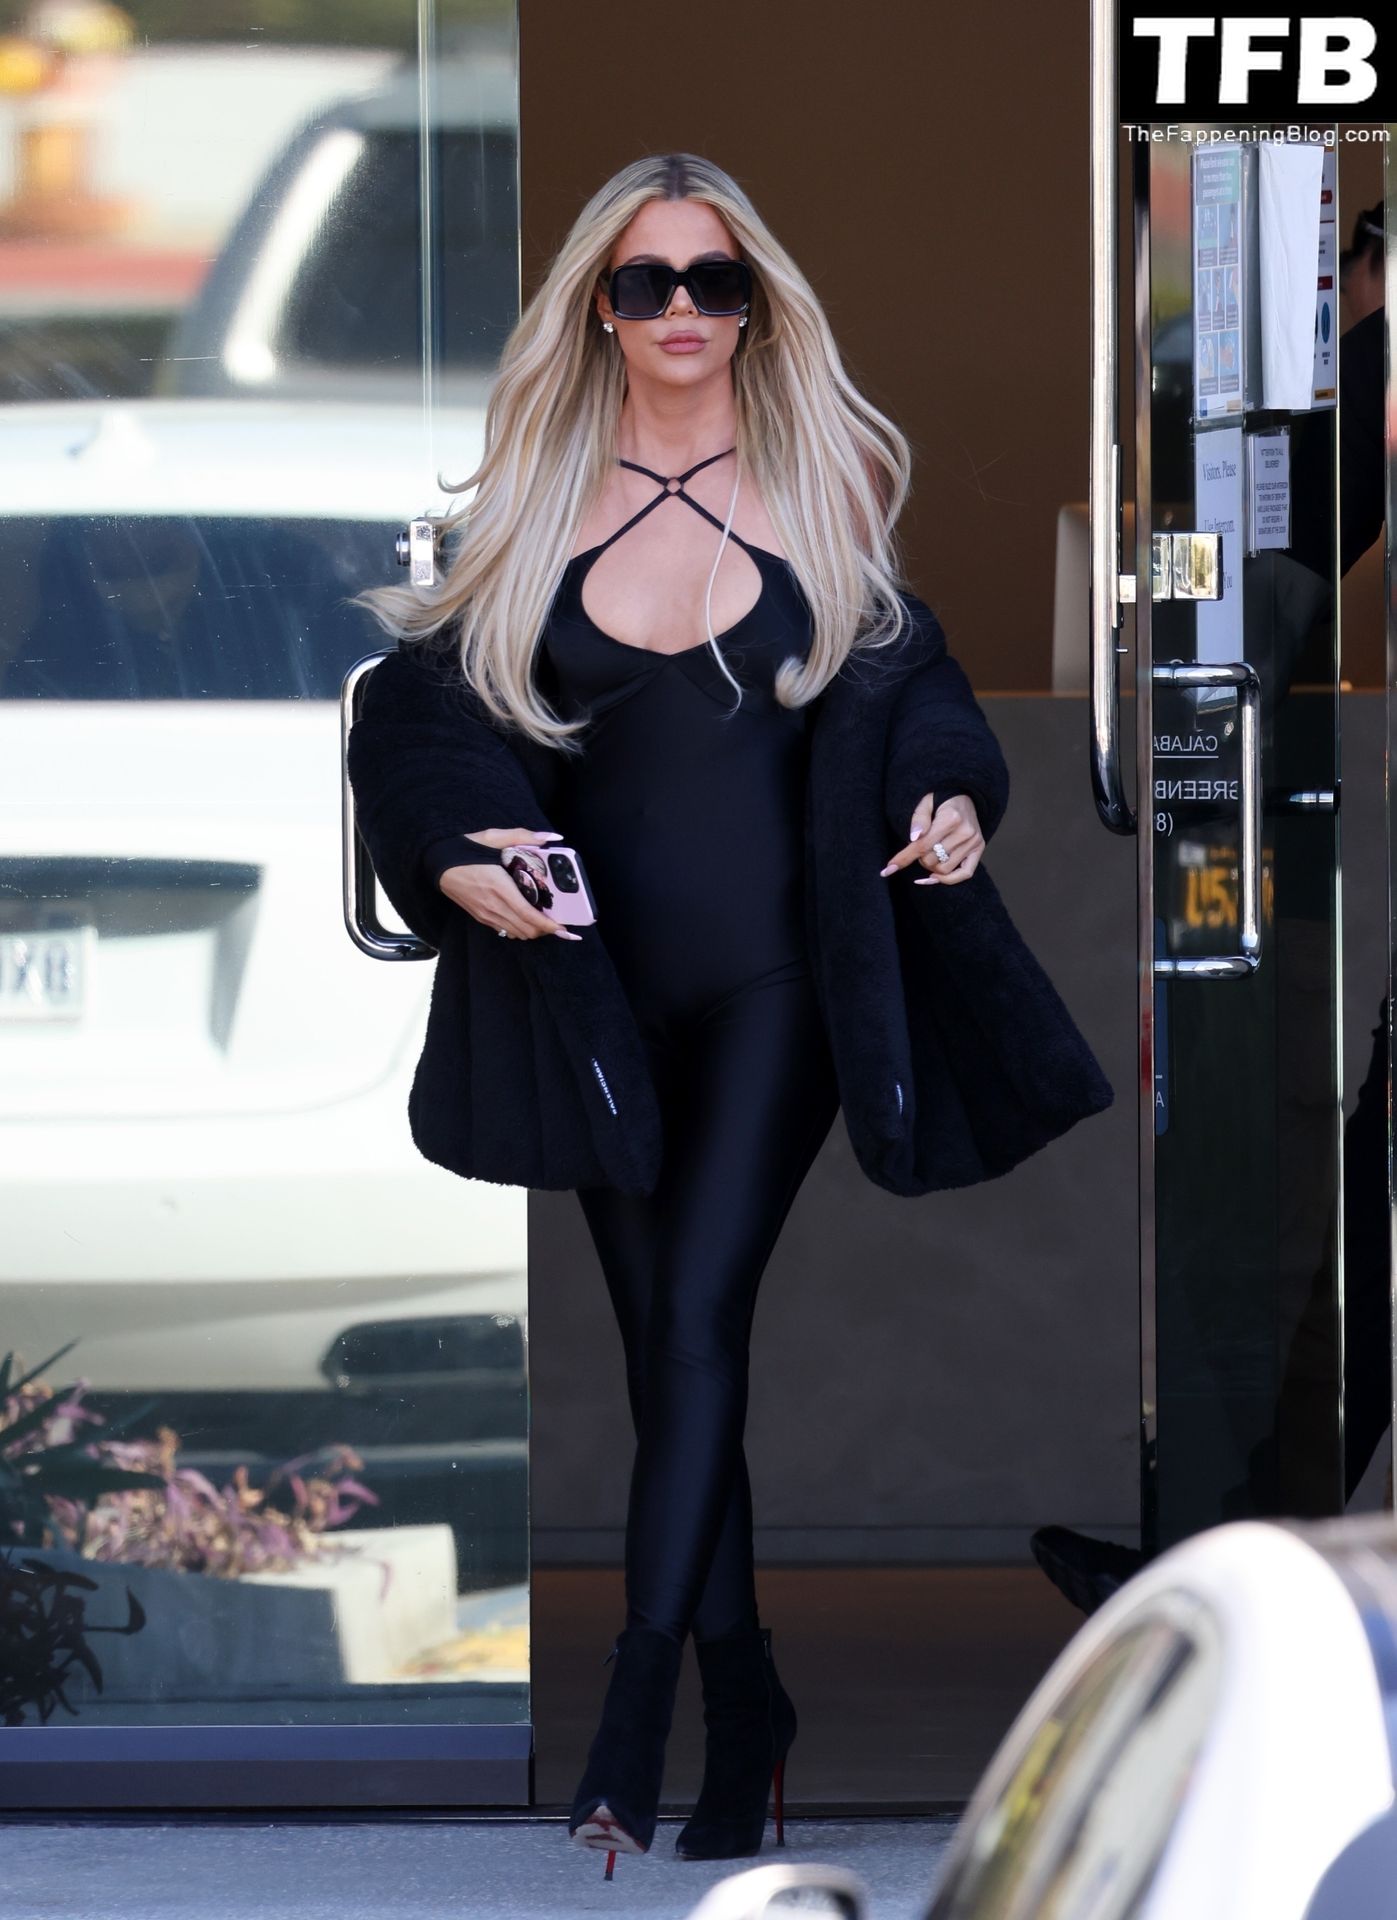 Khloe-Kardashian-Sexy-The-Fappening-Blog-10.jpg